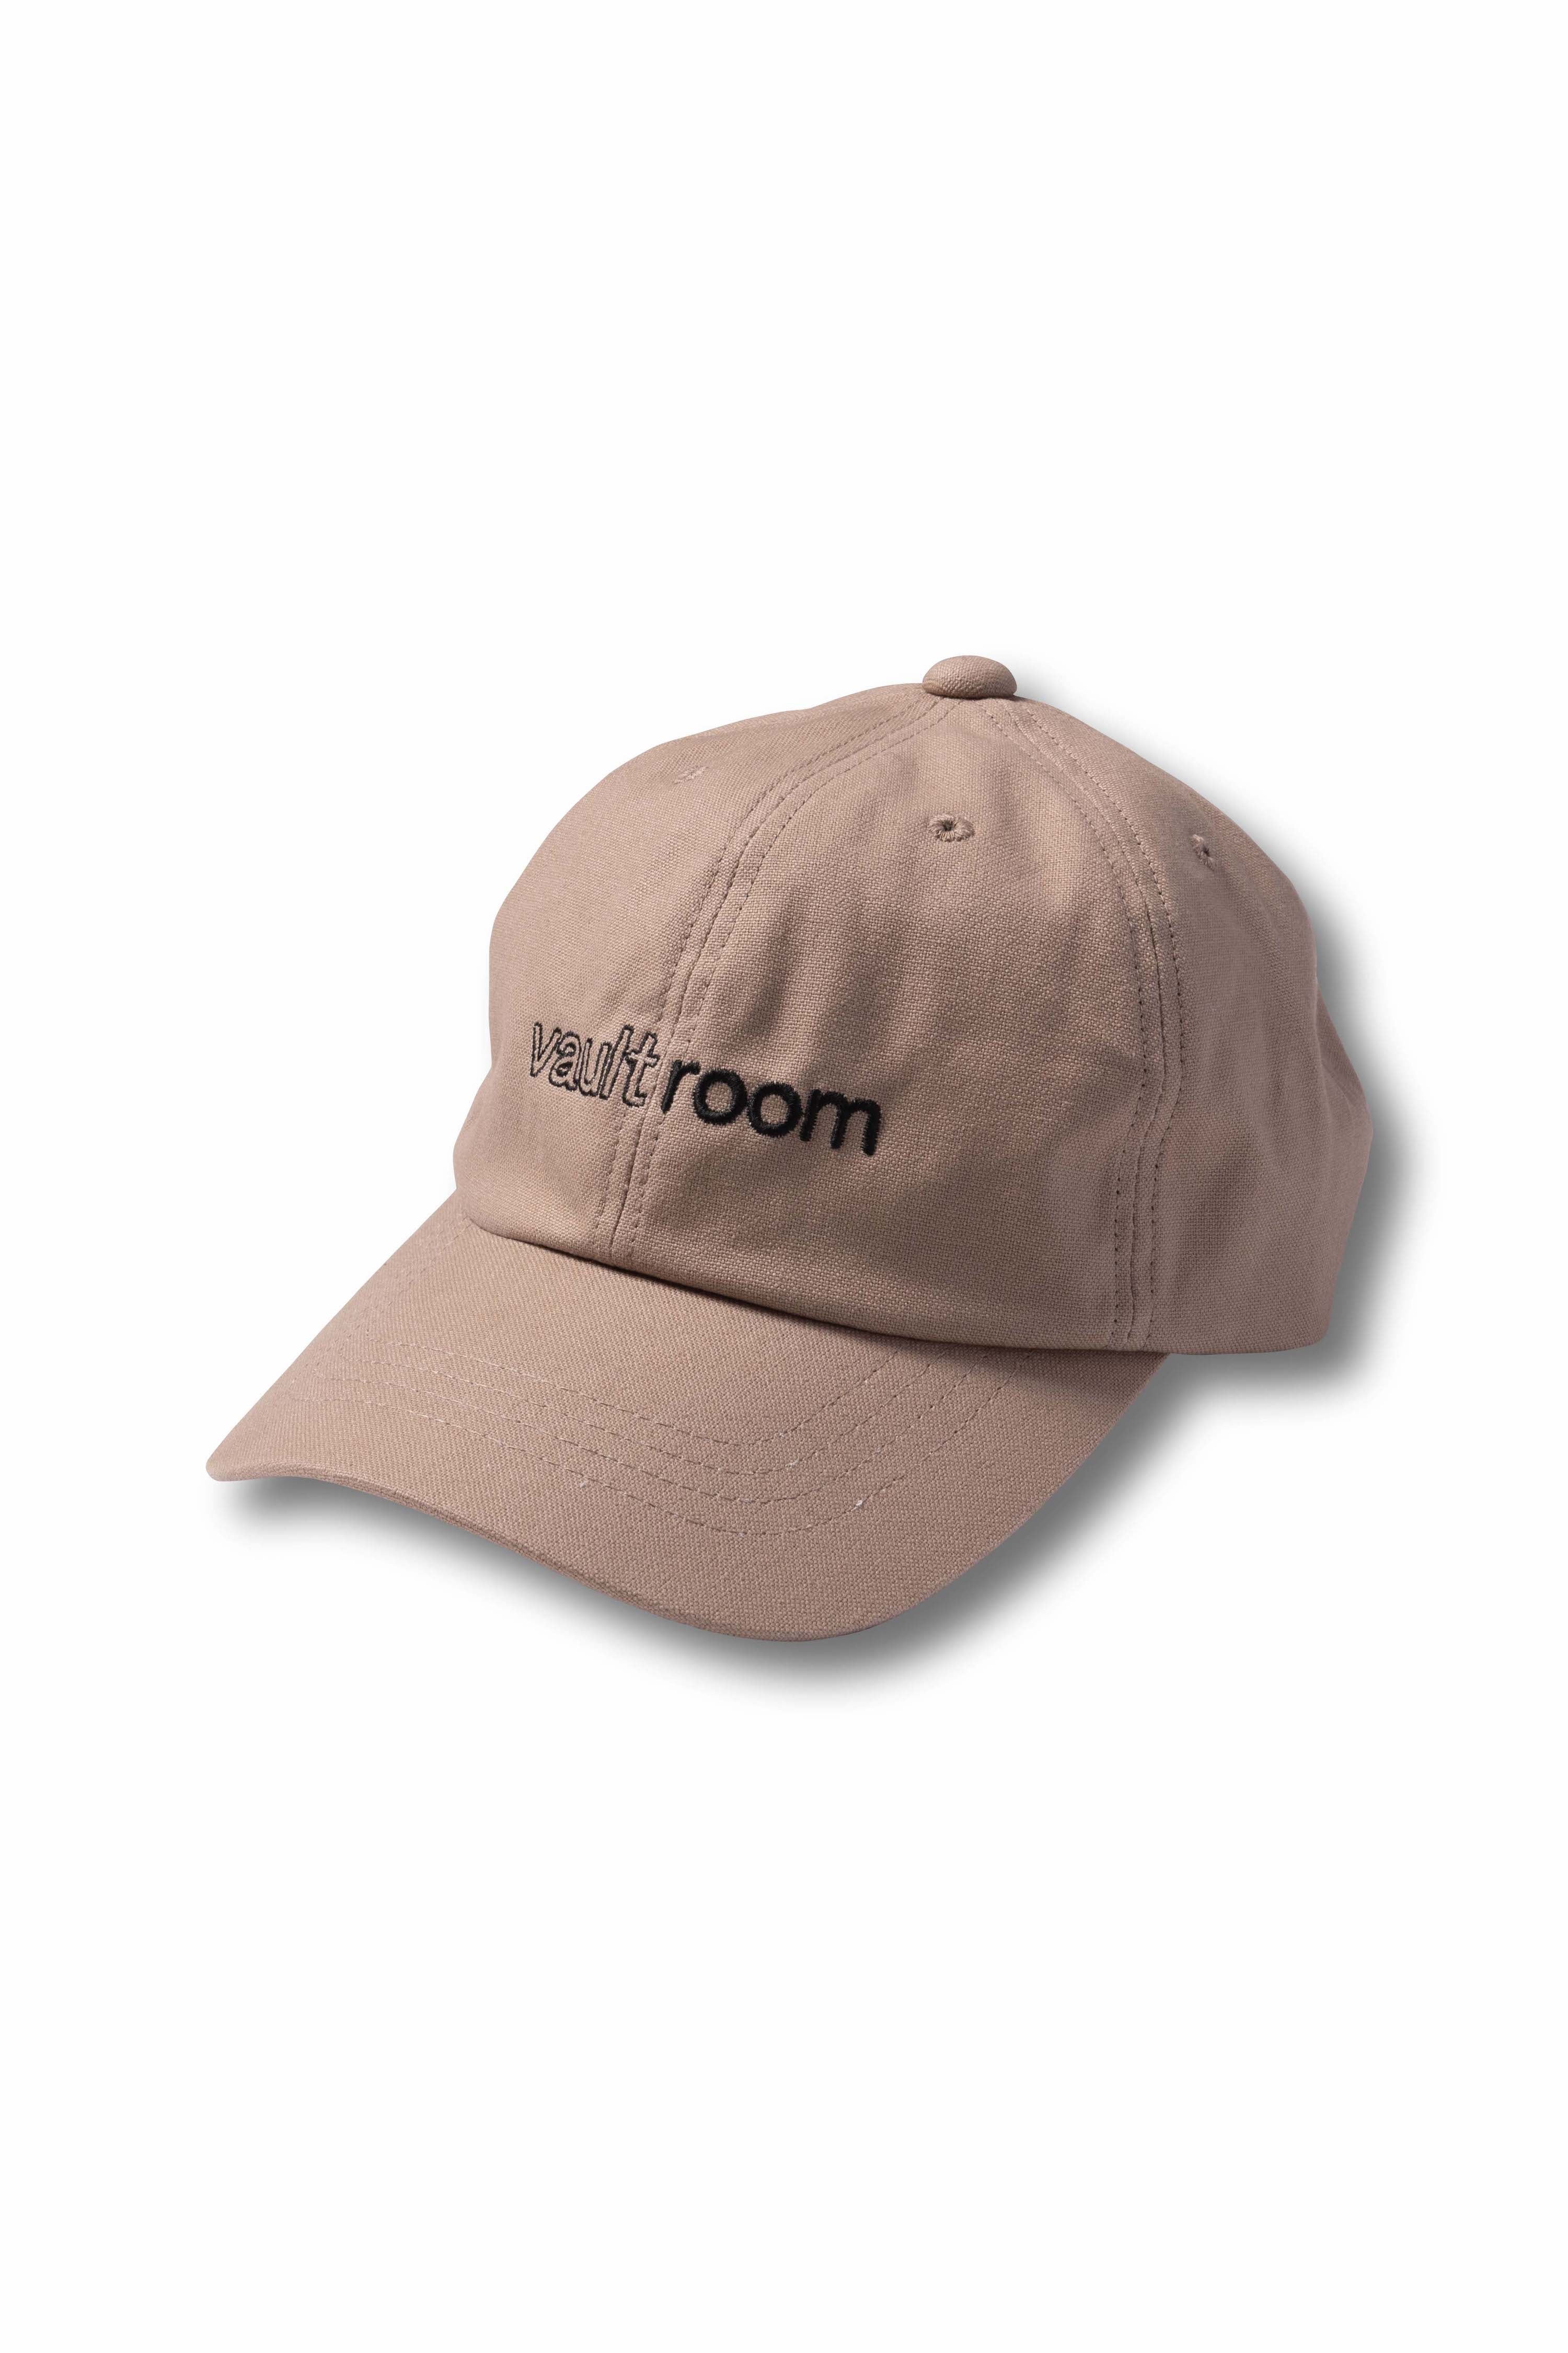 vaultroom LOGO CAP / BGE